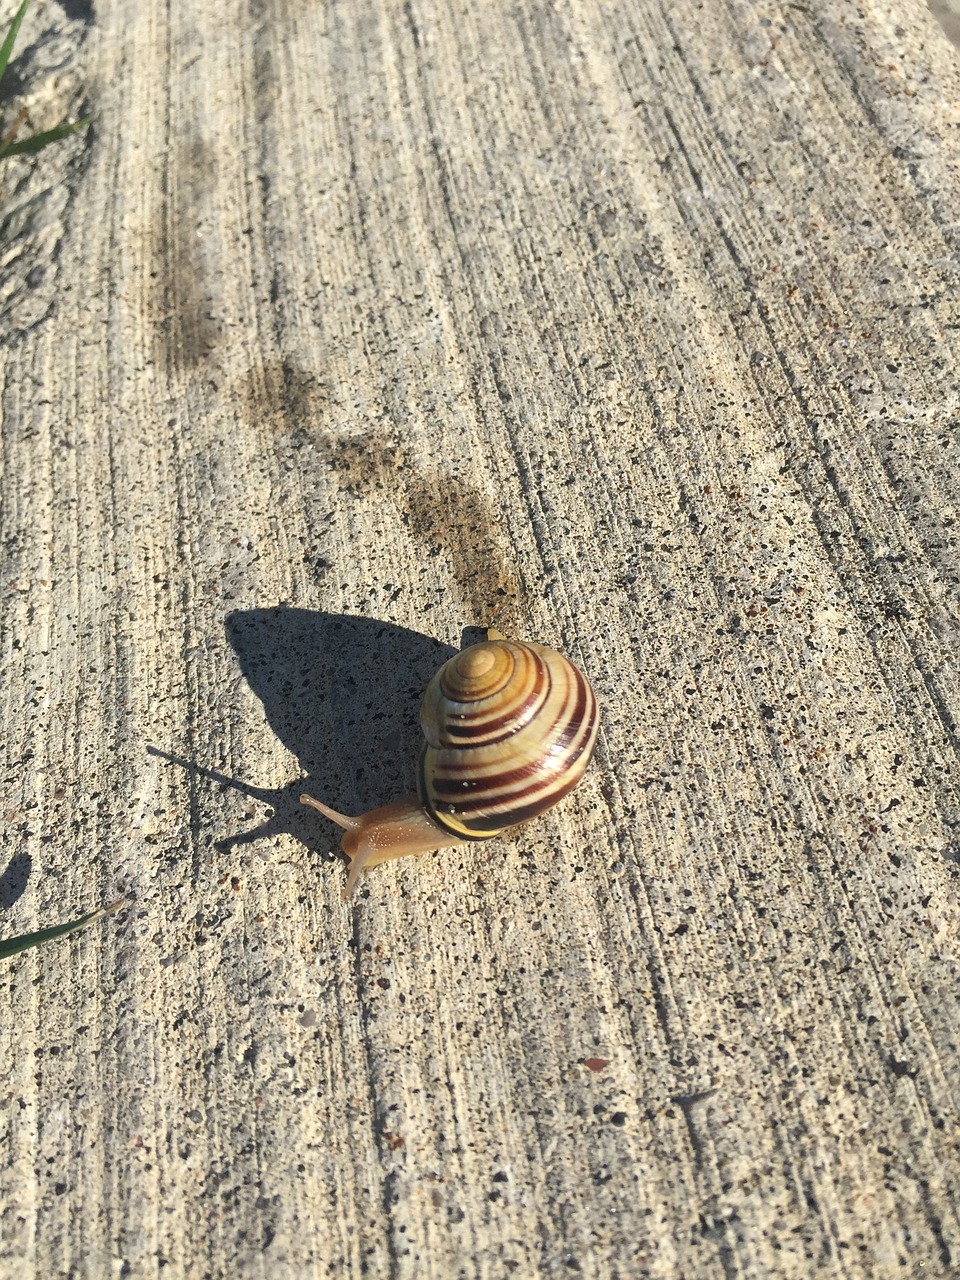 snails crawling footprint free photo